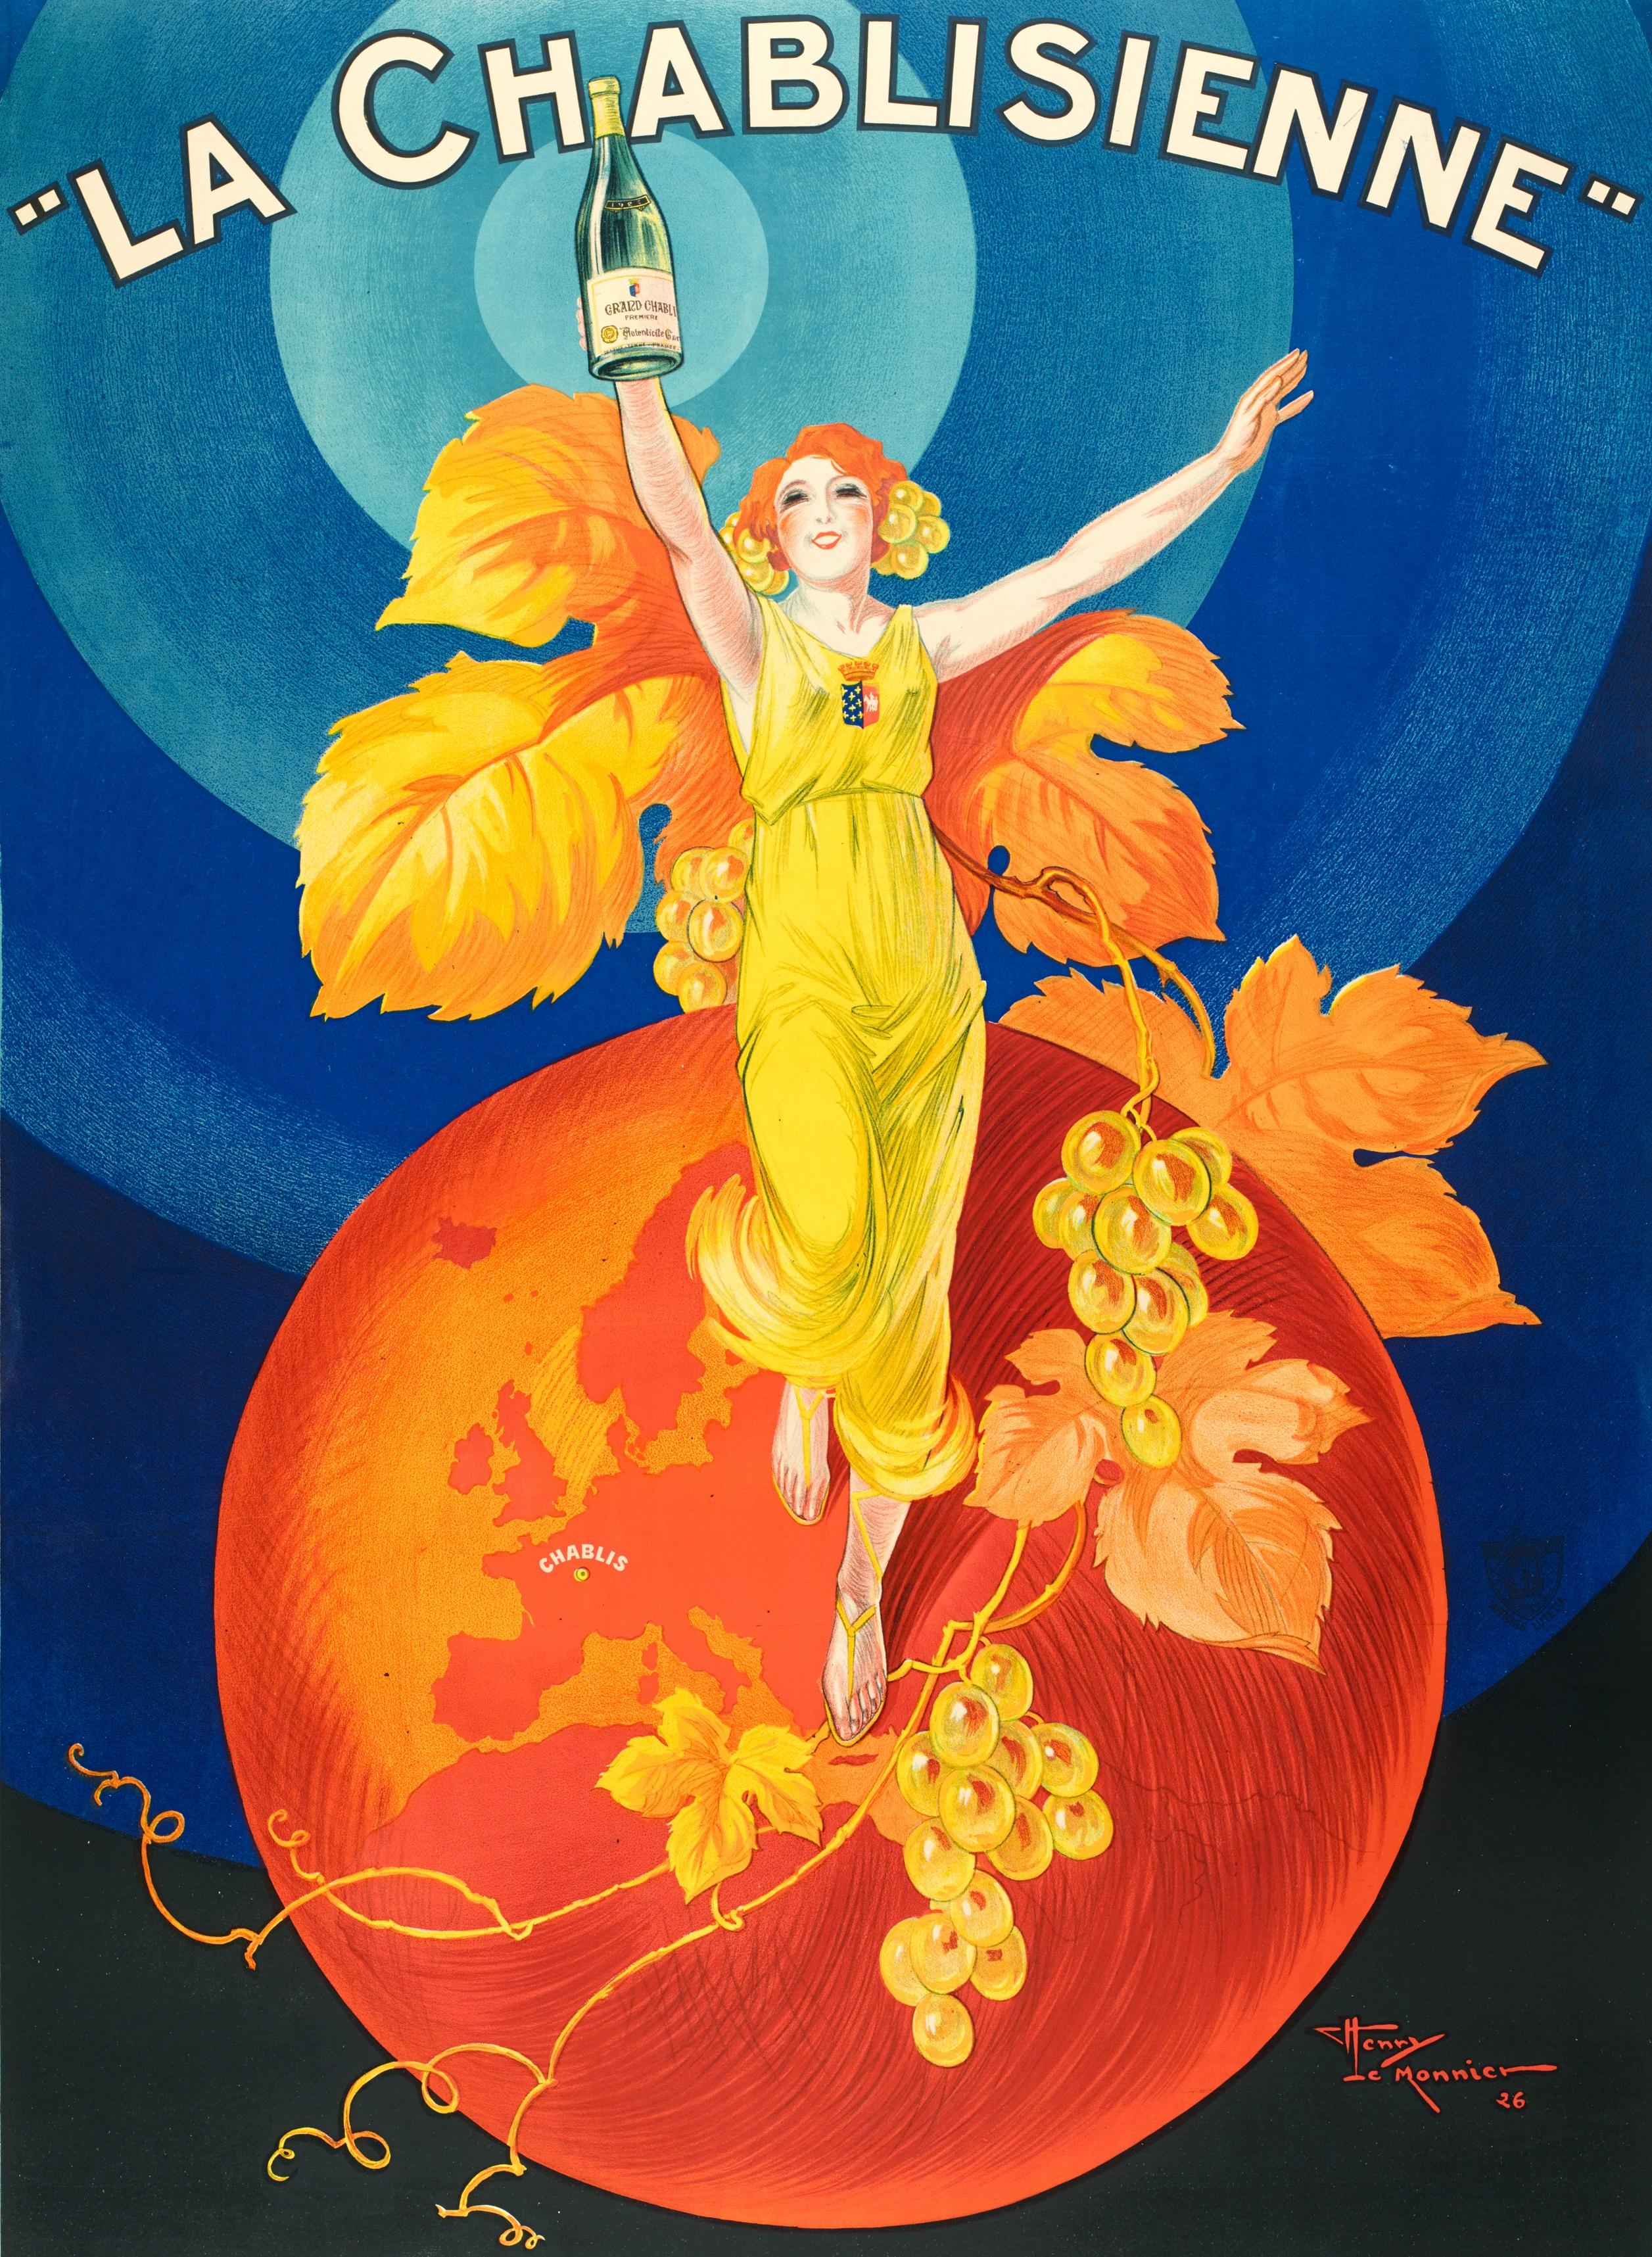 Original Vintage Poster for La chablisienne created by Henri Lemonnier in 1936.

Artist: Henri Lemonnier
Title: La Chablisienne -  Ses Chablis authentiques
Date: 1926
Size: 40.9 x 63 in / 104 x 160 cm
Printer : Affiches LUTETIA, 55 Rue Rochechouart,